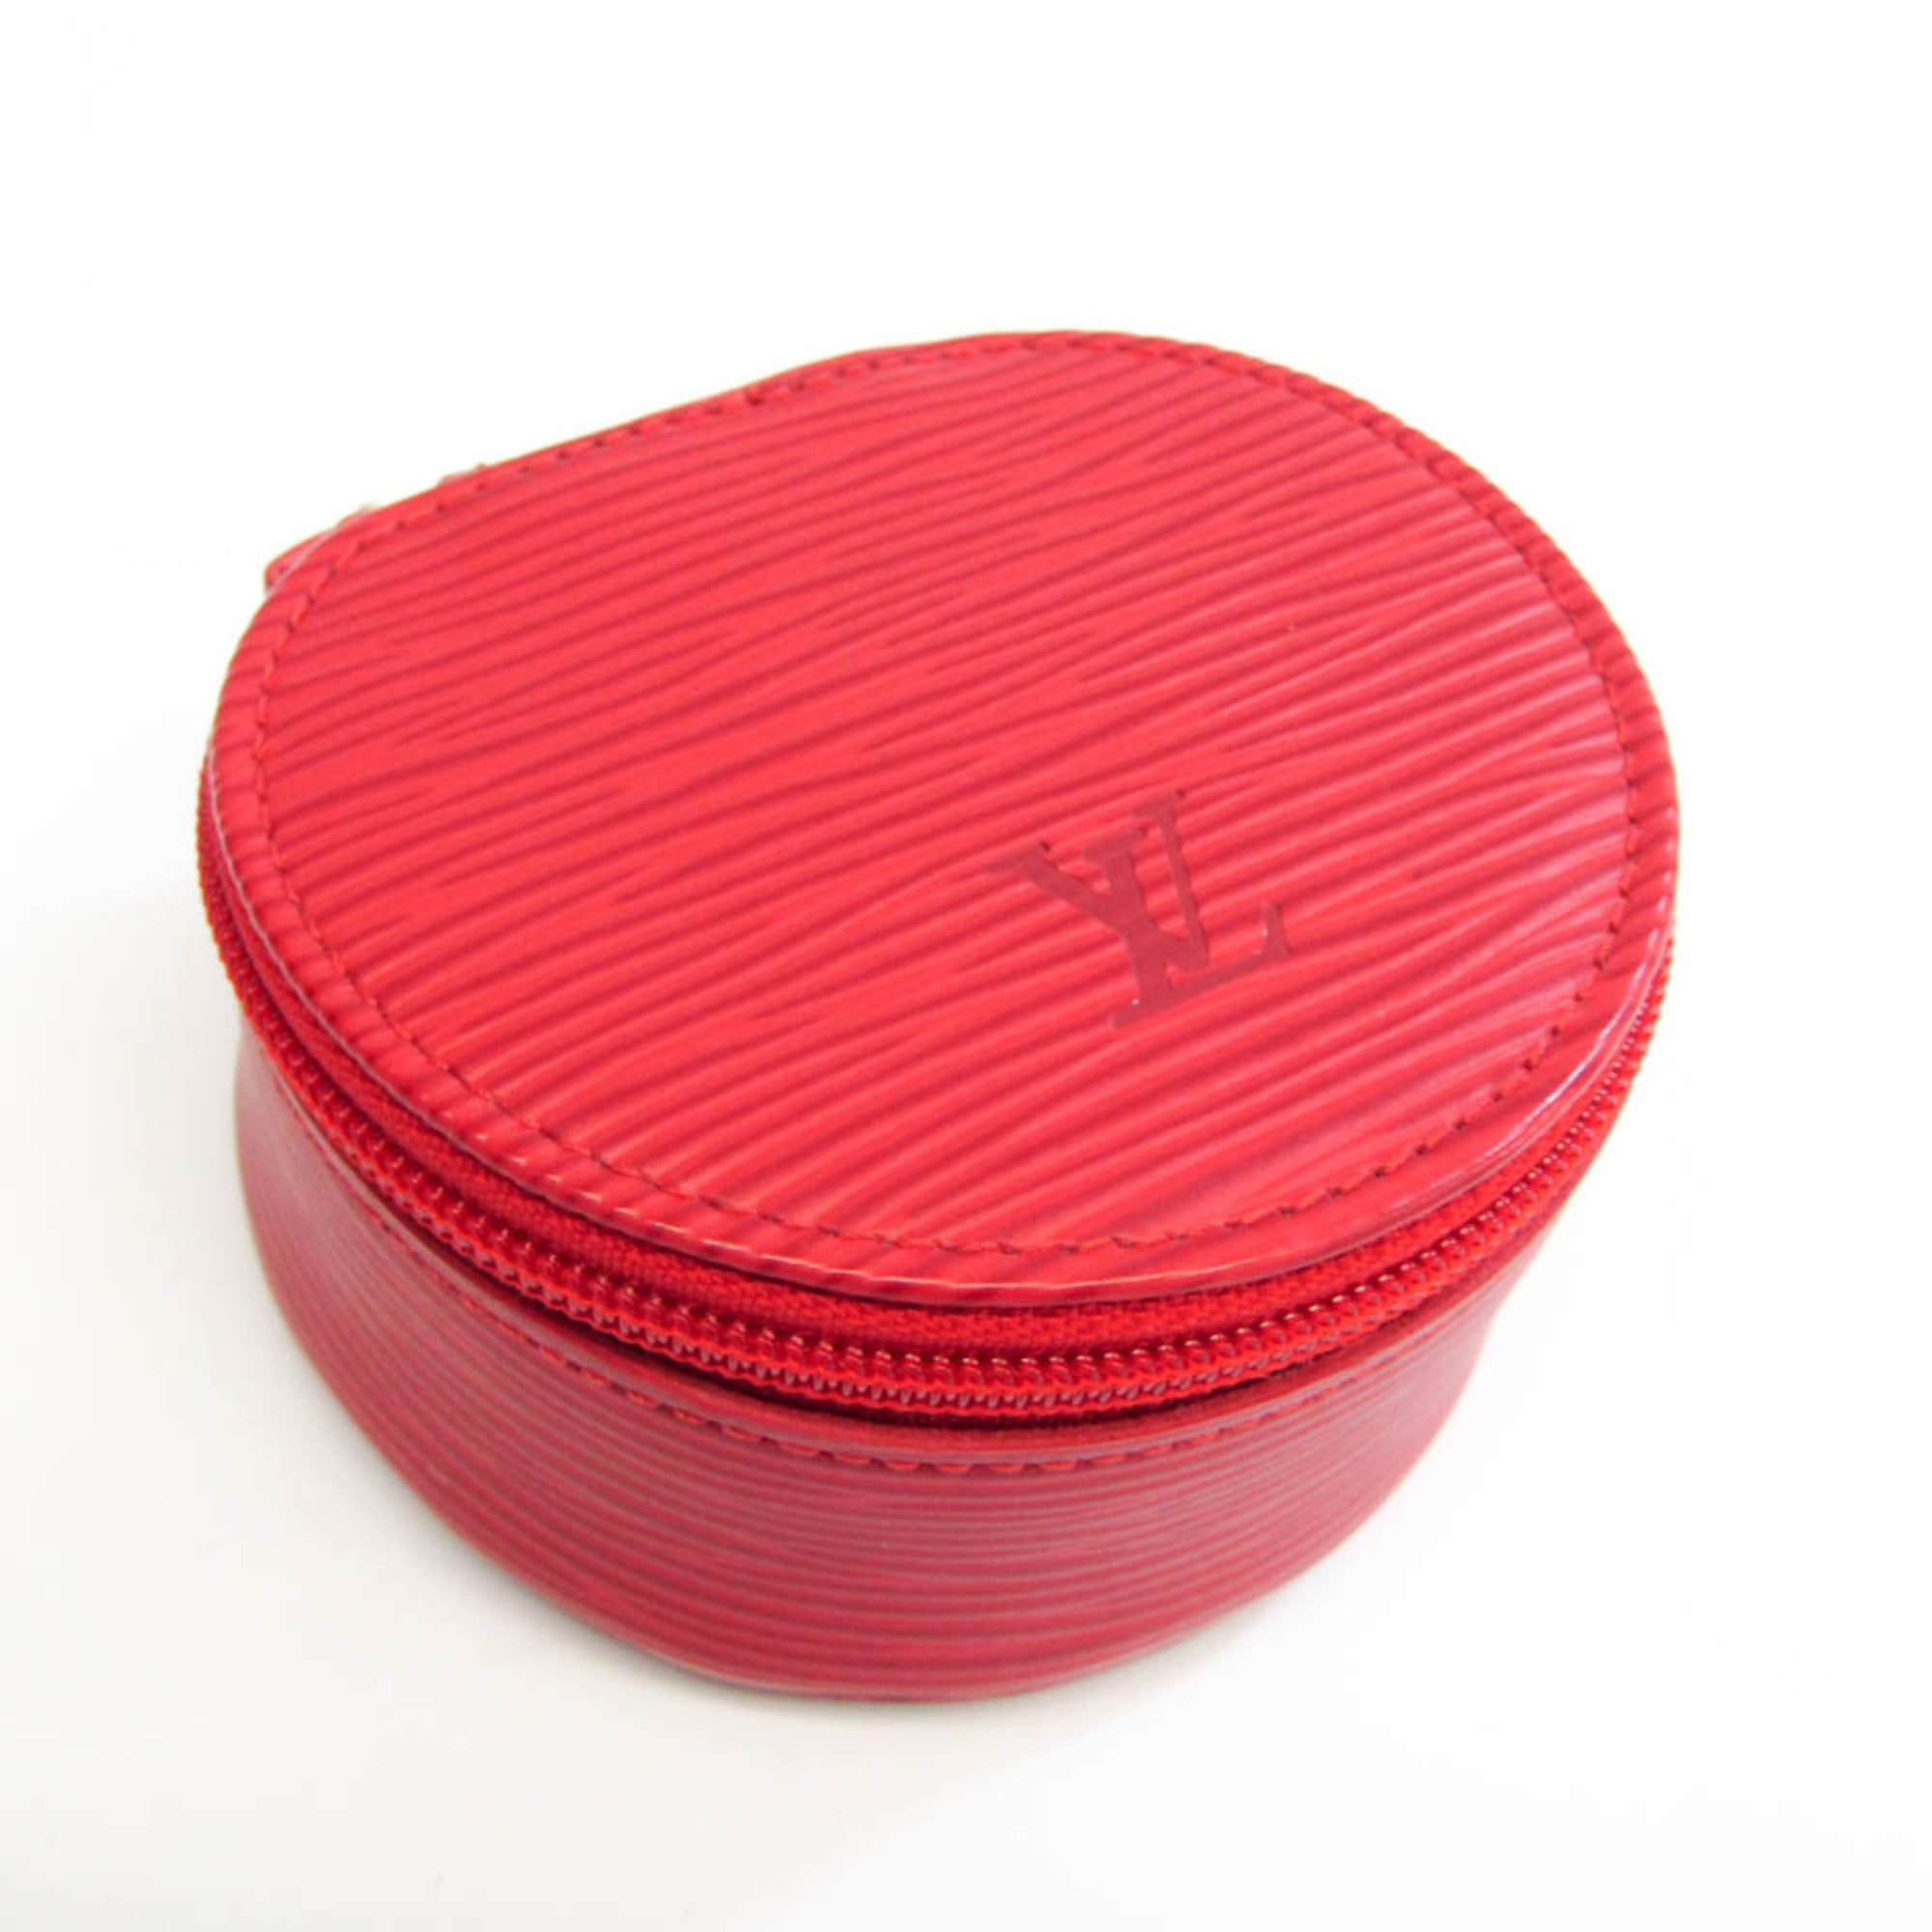 Red Epi Leather Louis Vuitton Bijoux Travel Case - Luggage